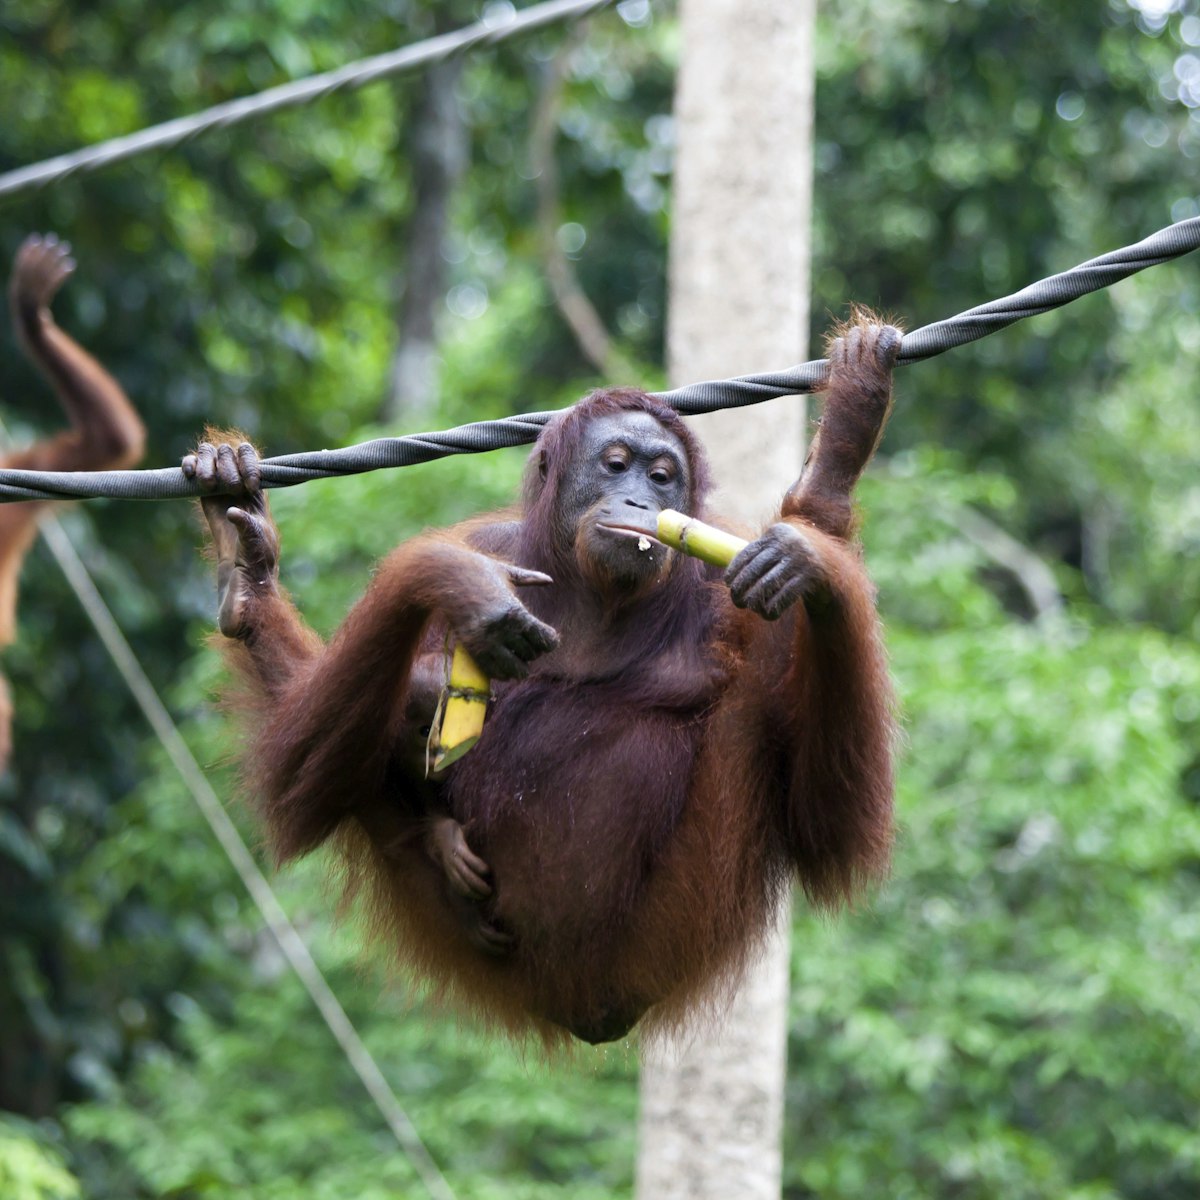 Mother orang-utan carrying baby and bamboo